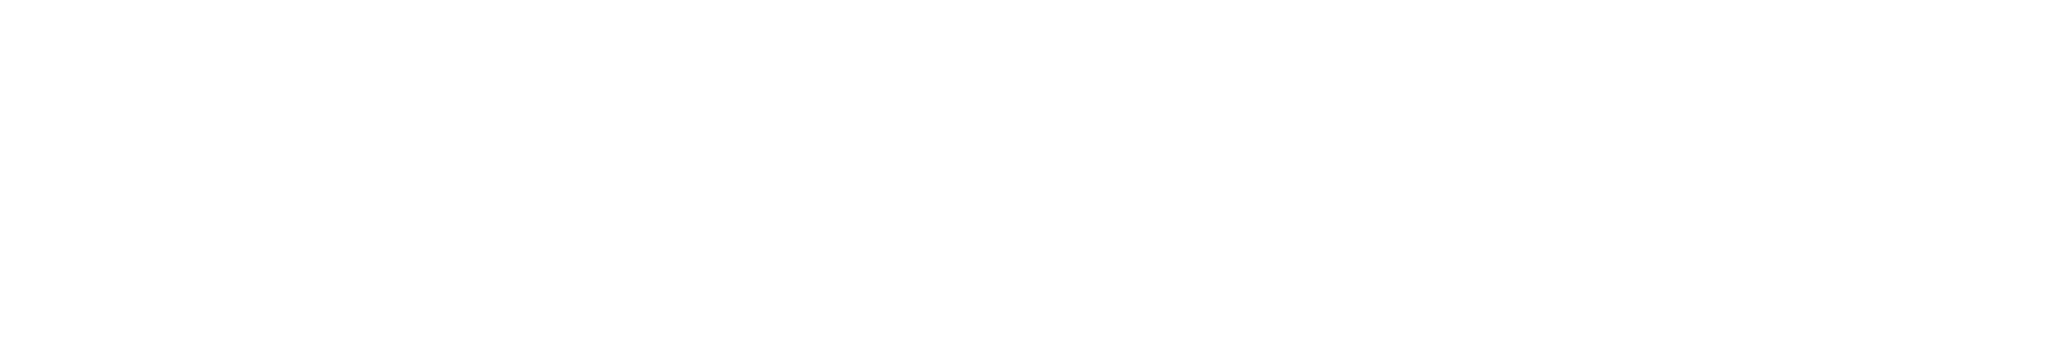 piwikpro-logo-light-2048×360-1